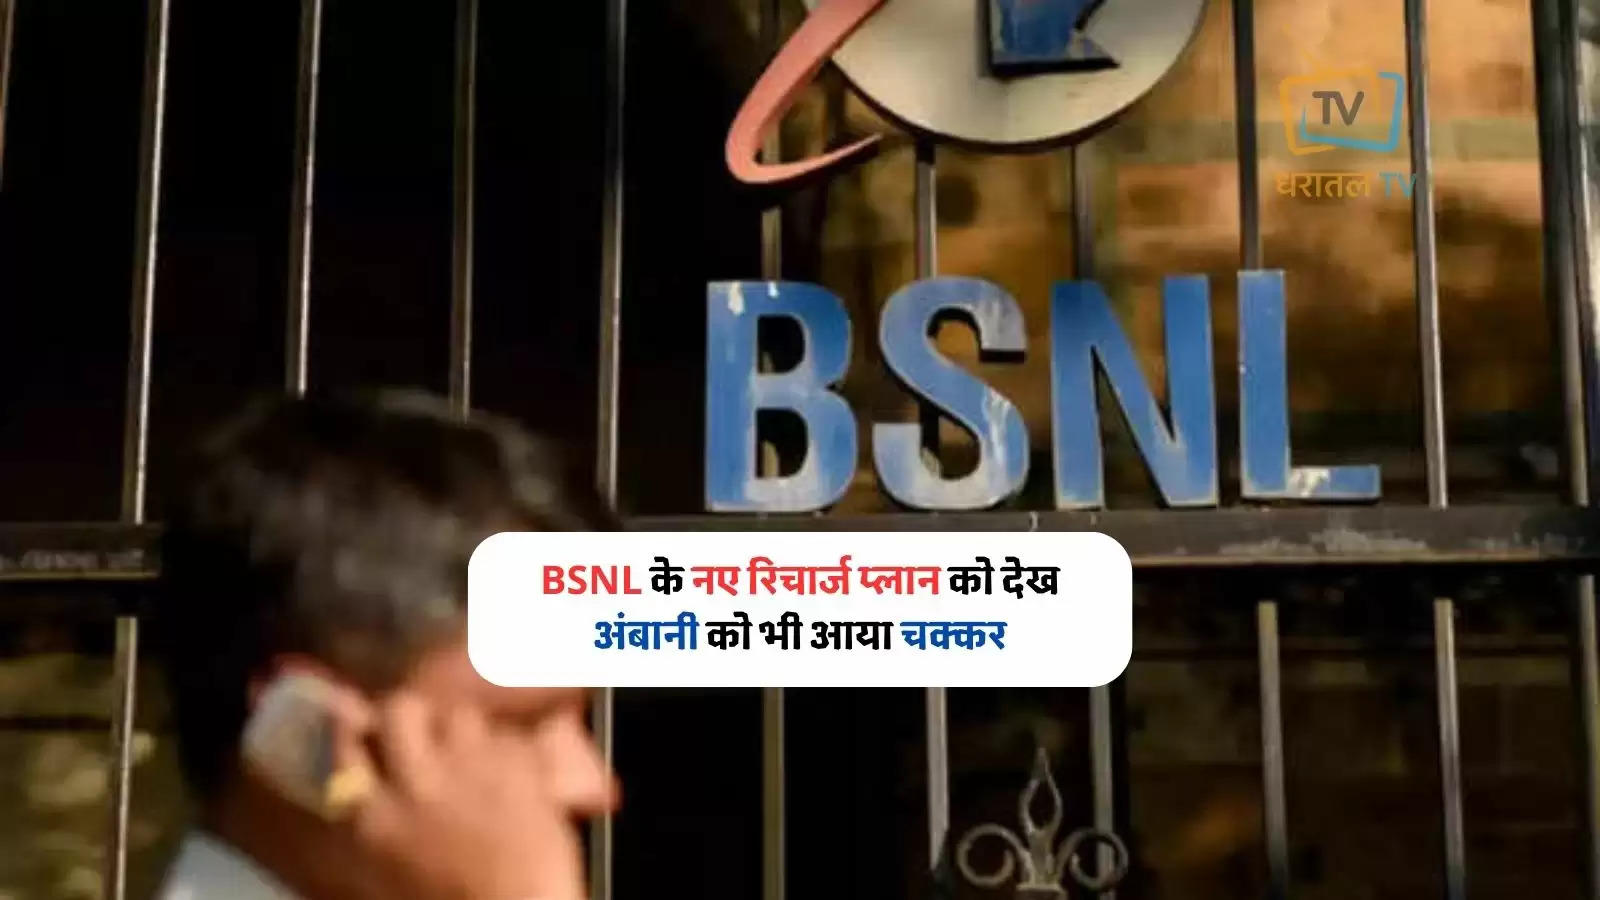 BSNL new recharge plan of 397